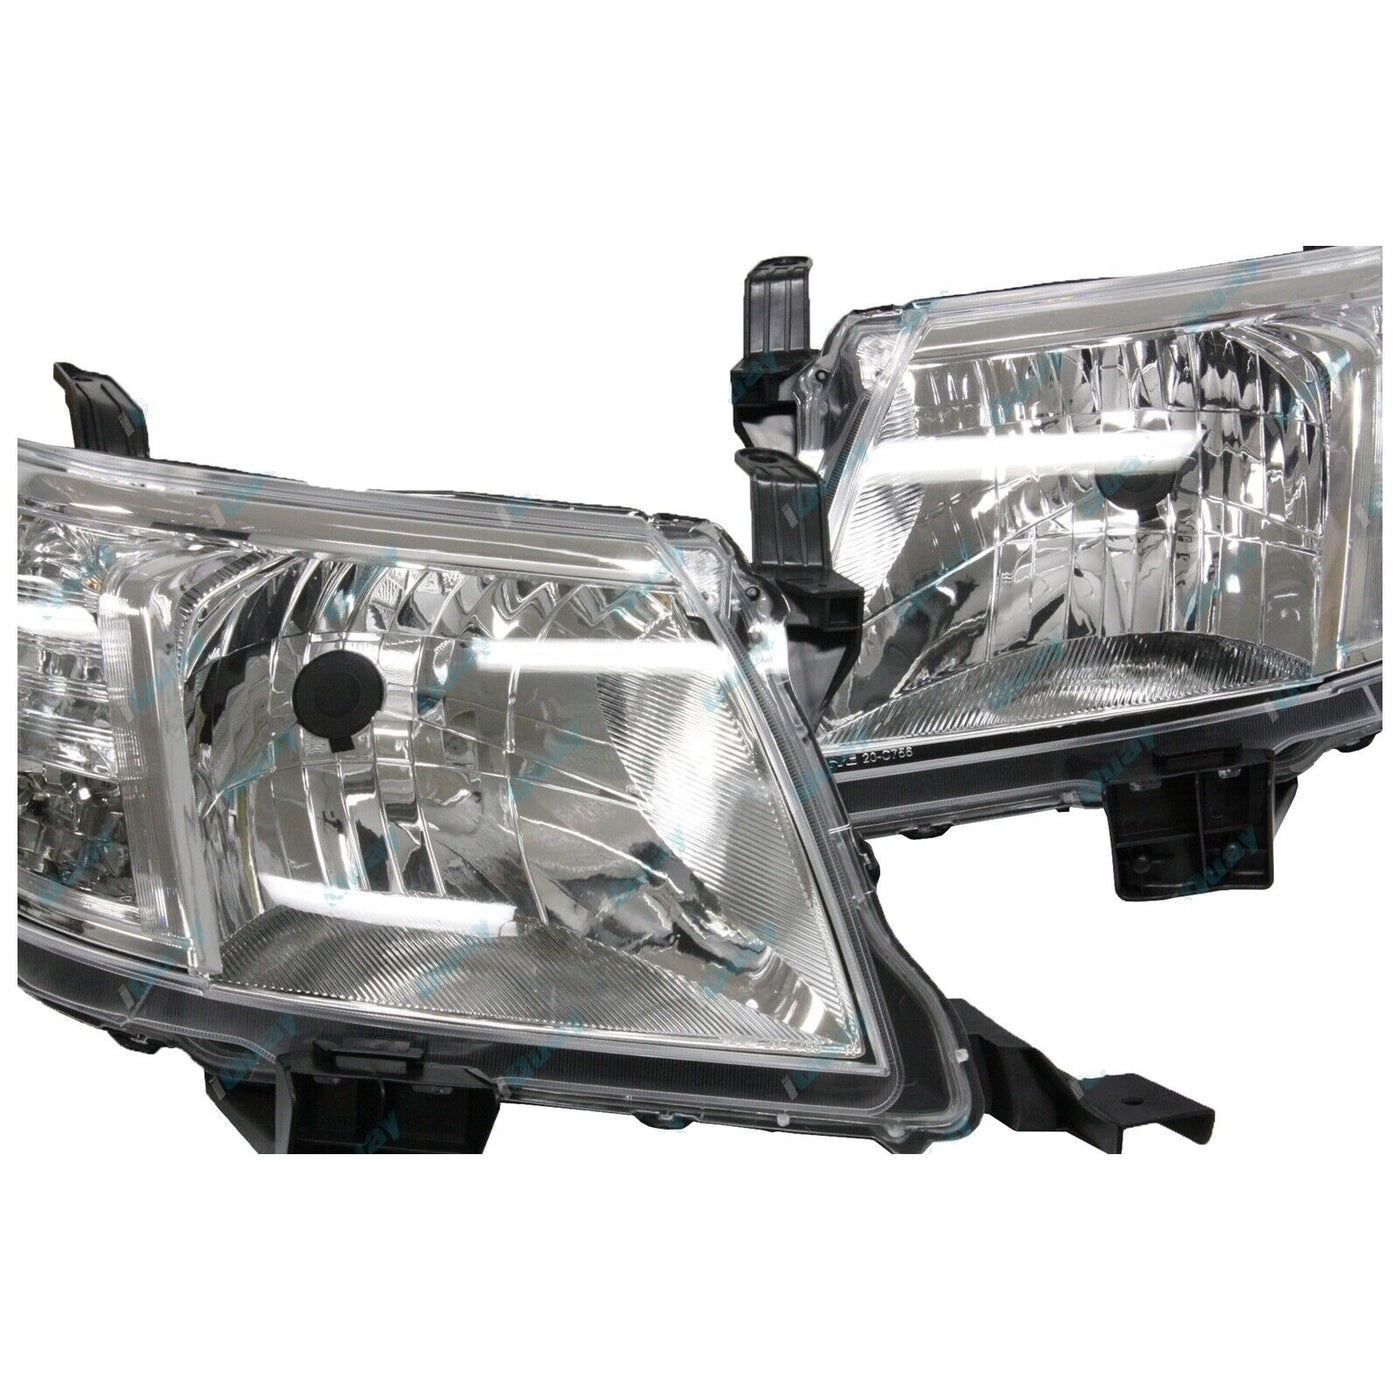 OEM Headlight Unit Pair Suitable For Toyota Hilux 2012-2014 (Pre Order) - OZI4X4 PTY LTD